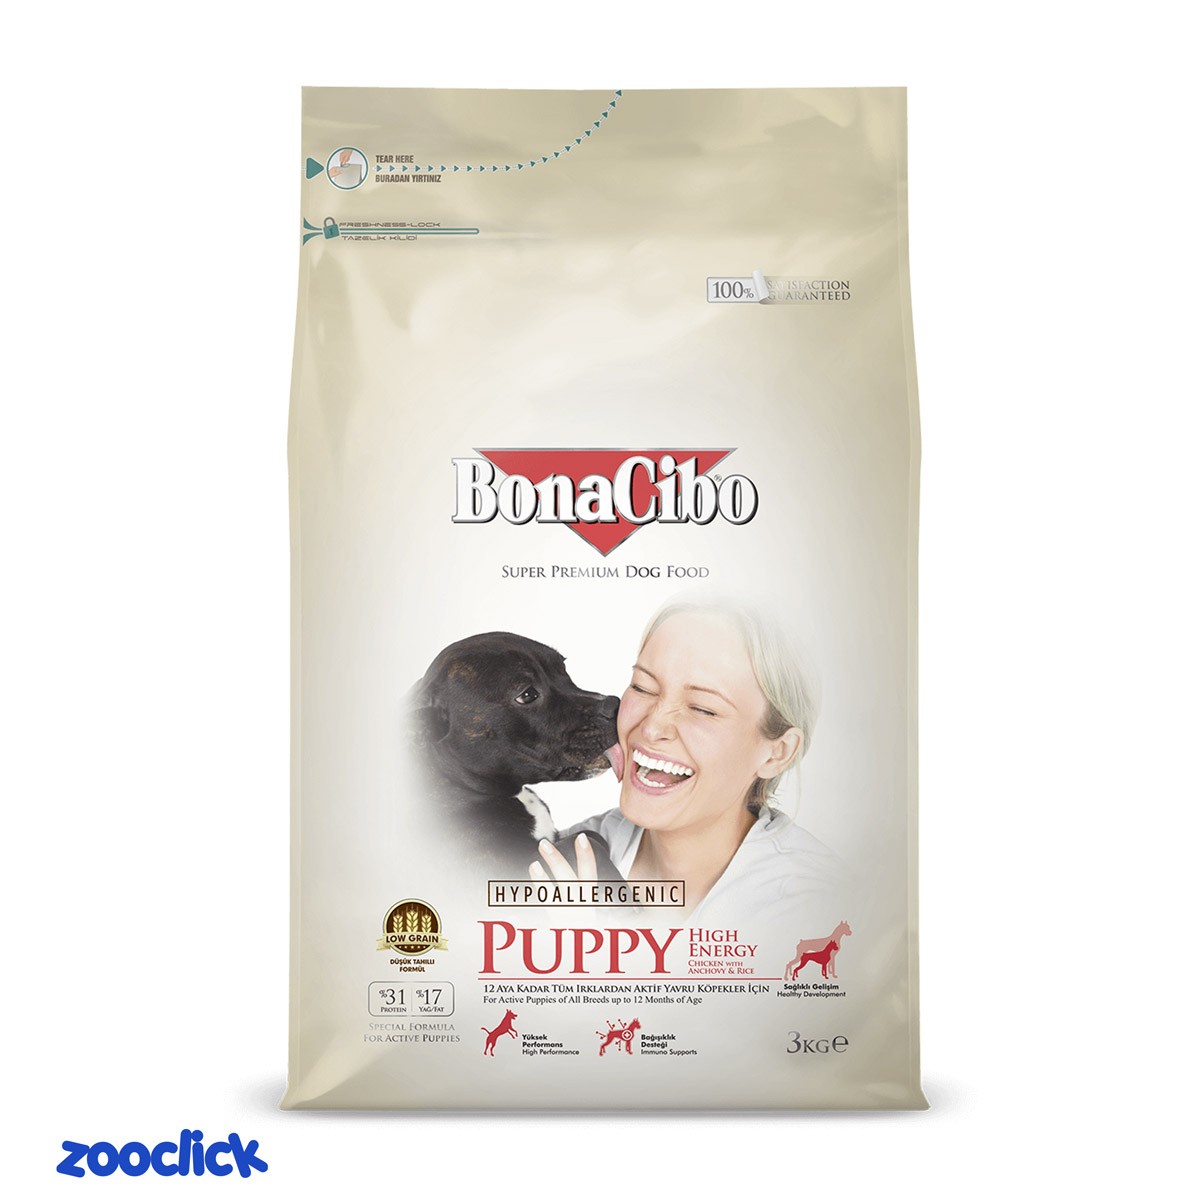 bonacibo puppy high energy غذای خشک توله سگ فعال و پر انرژی بوناسیبو